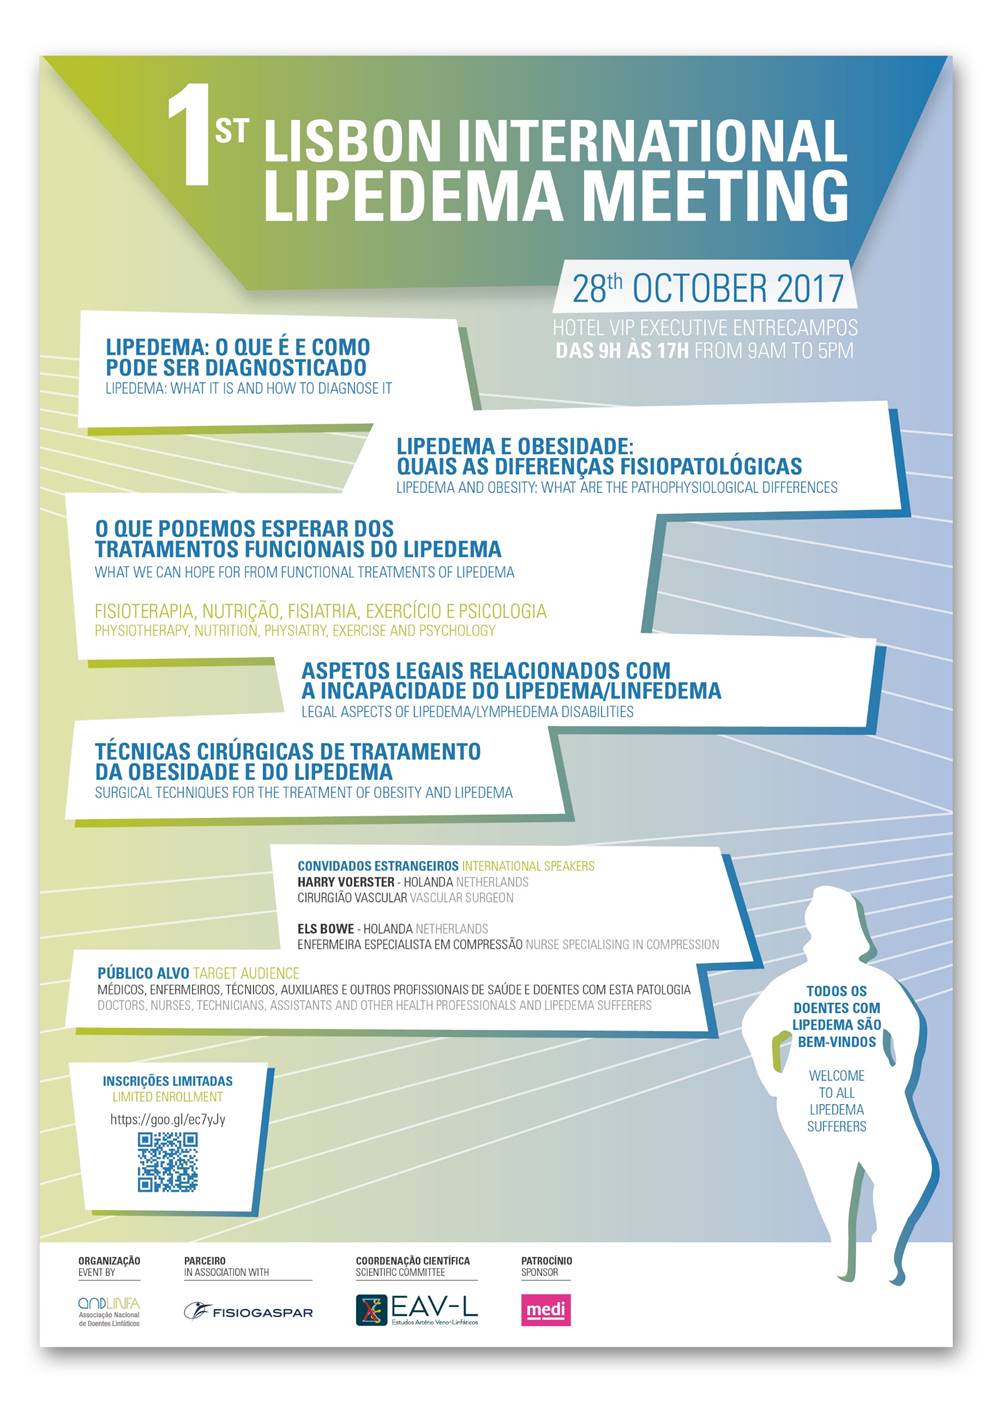 Lisbon lipedema meeting